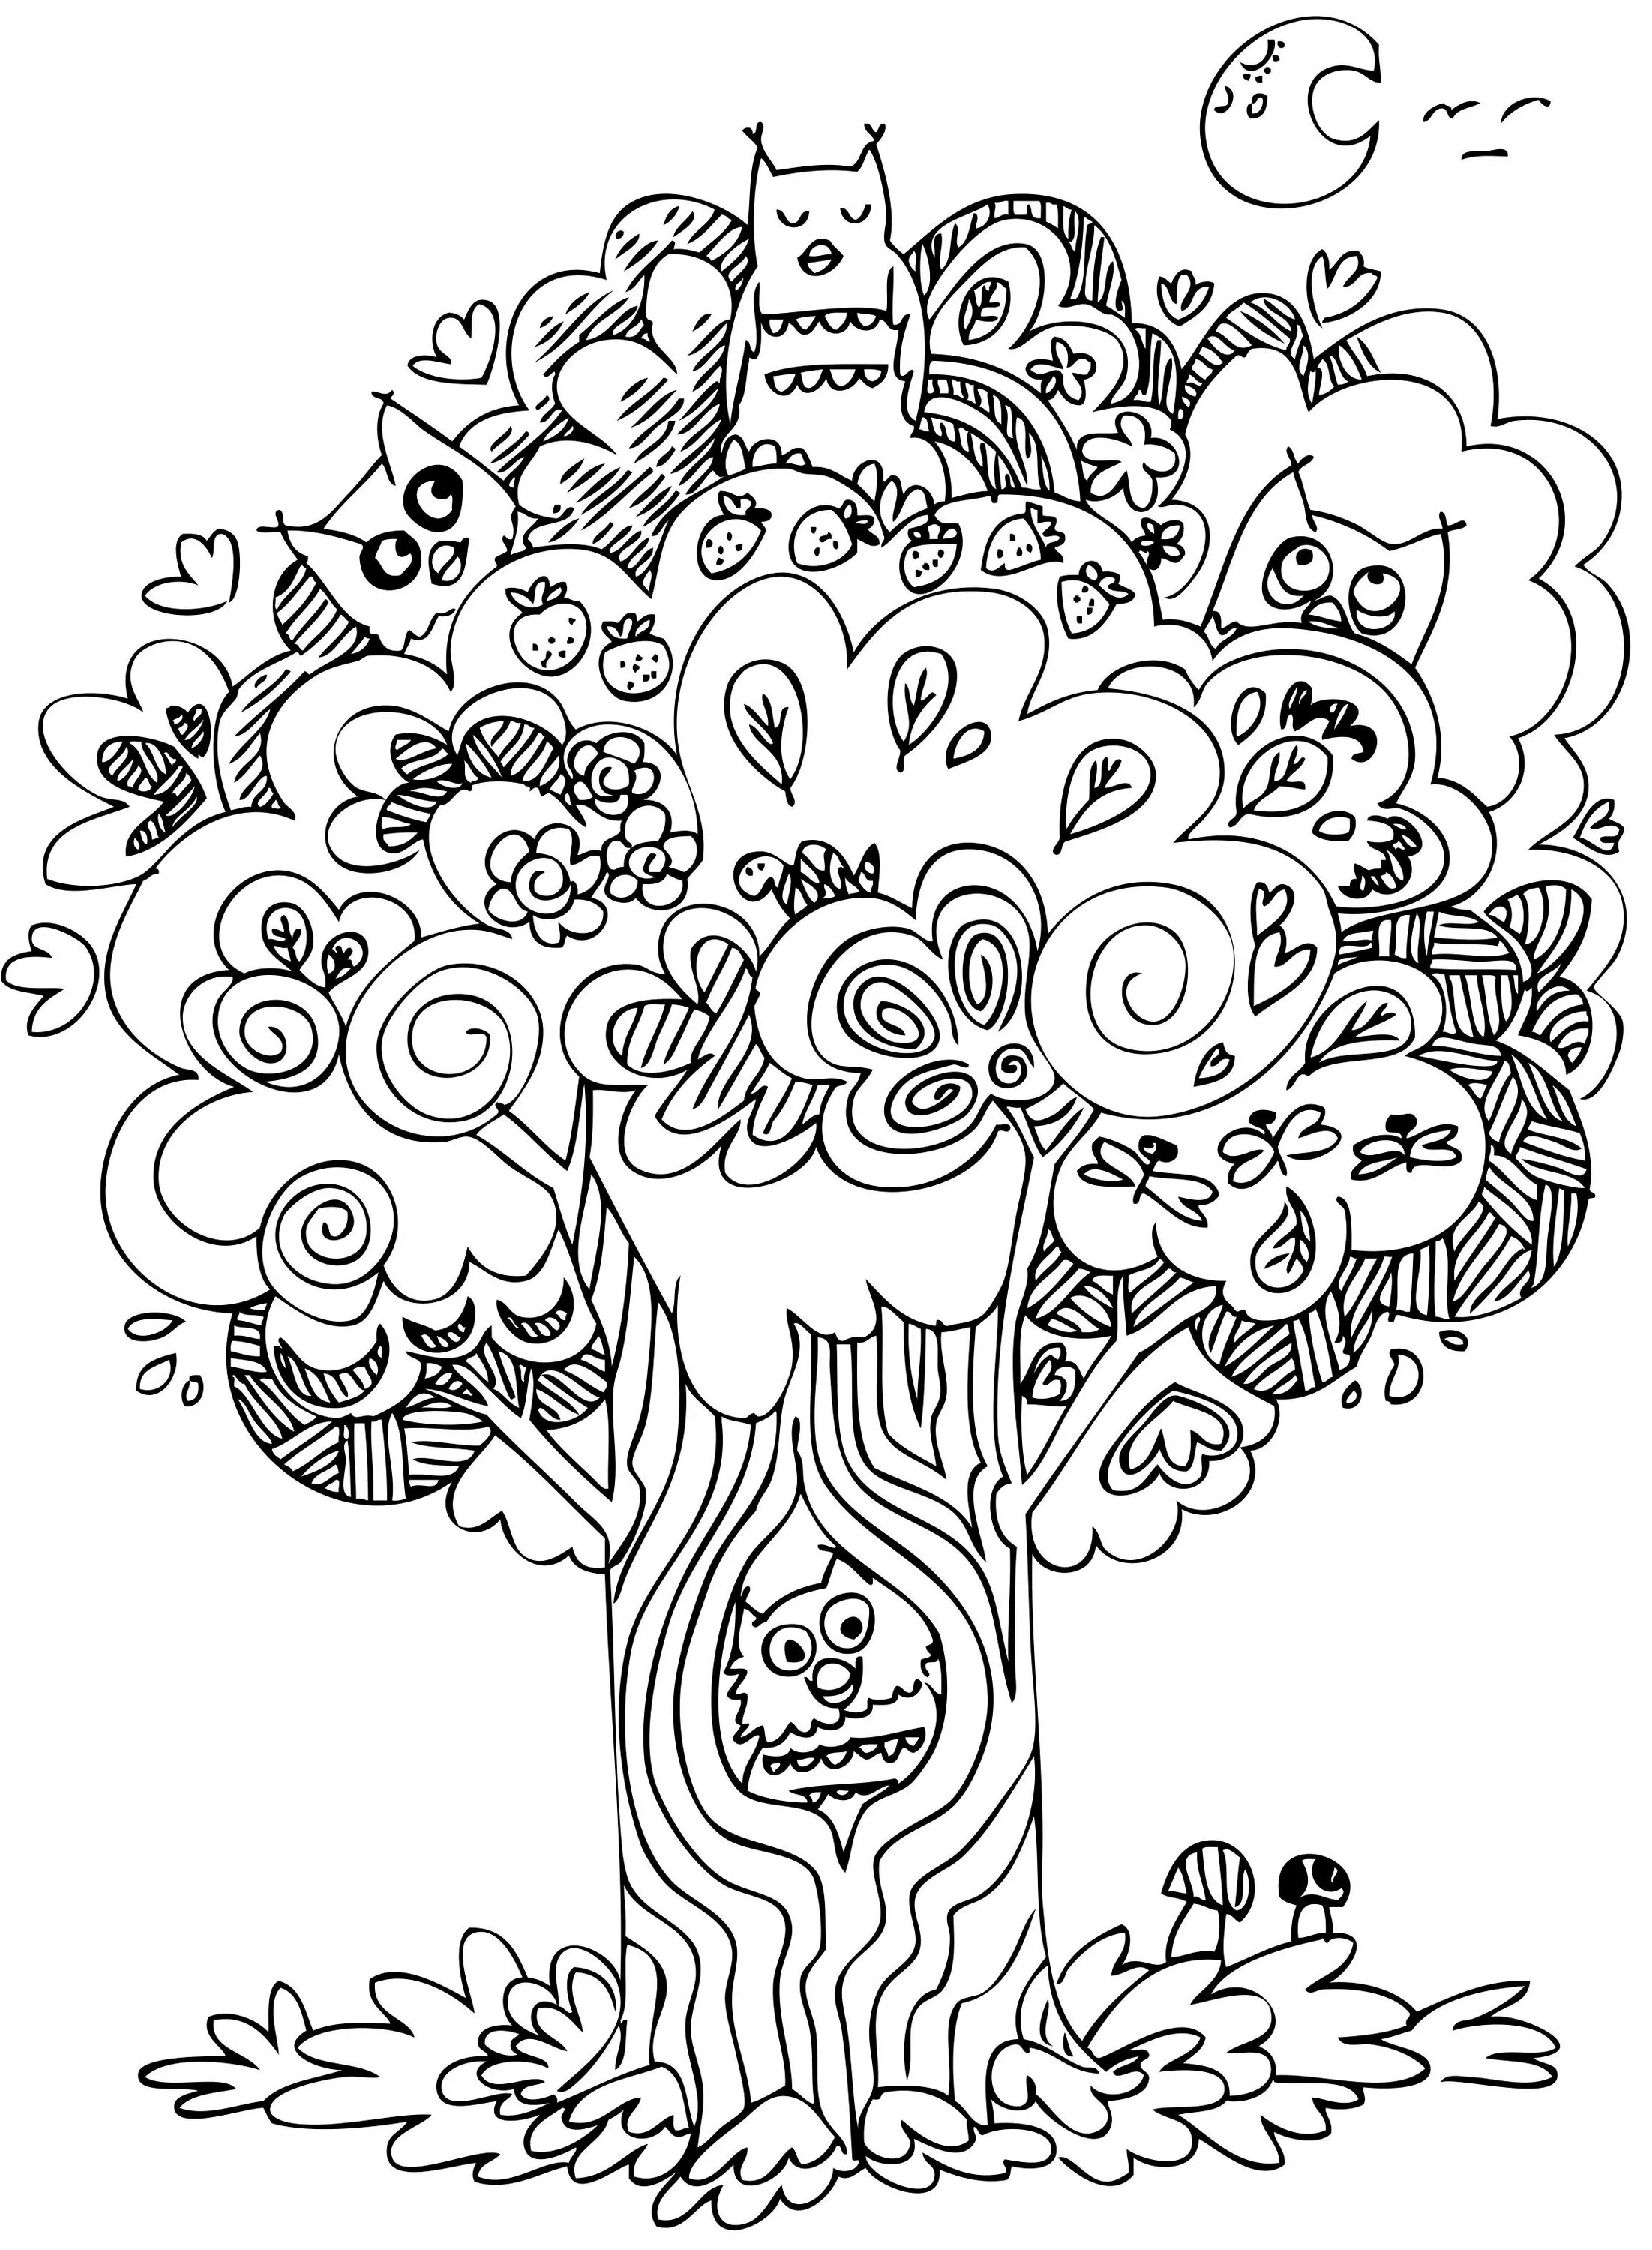 Wonderful colored wonder tree coloring page